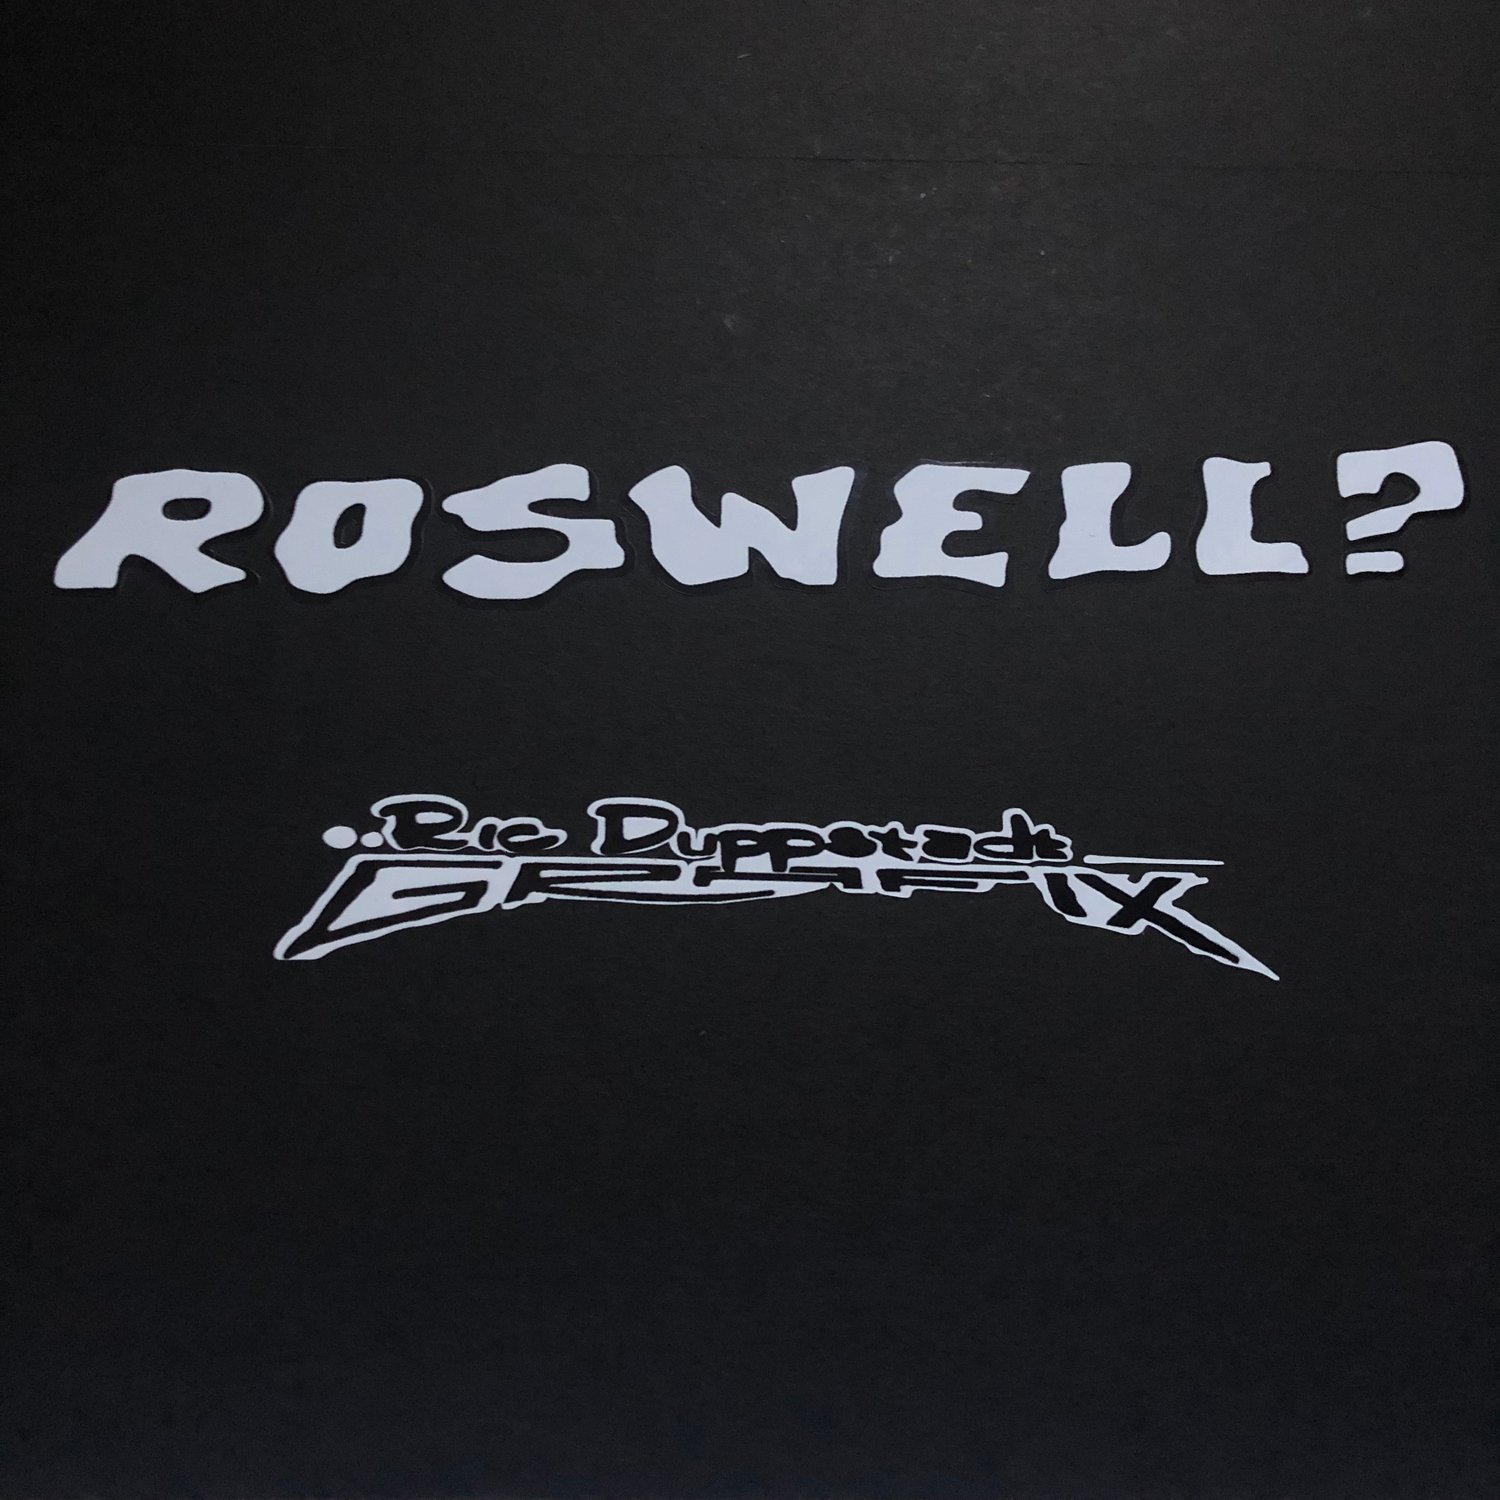 Image of Dimebag Darrell Trendkill Roswell & Ric Duppstadt sticker